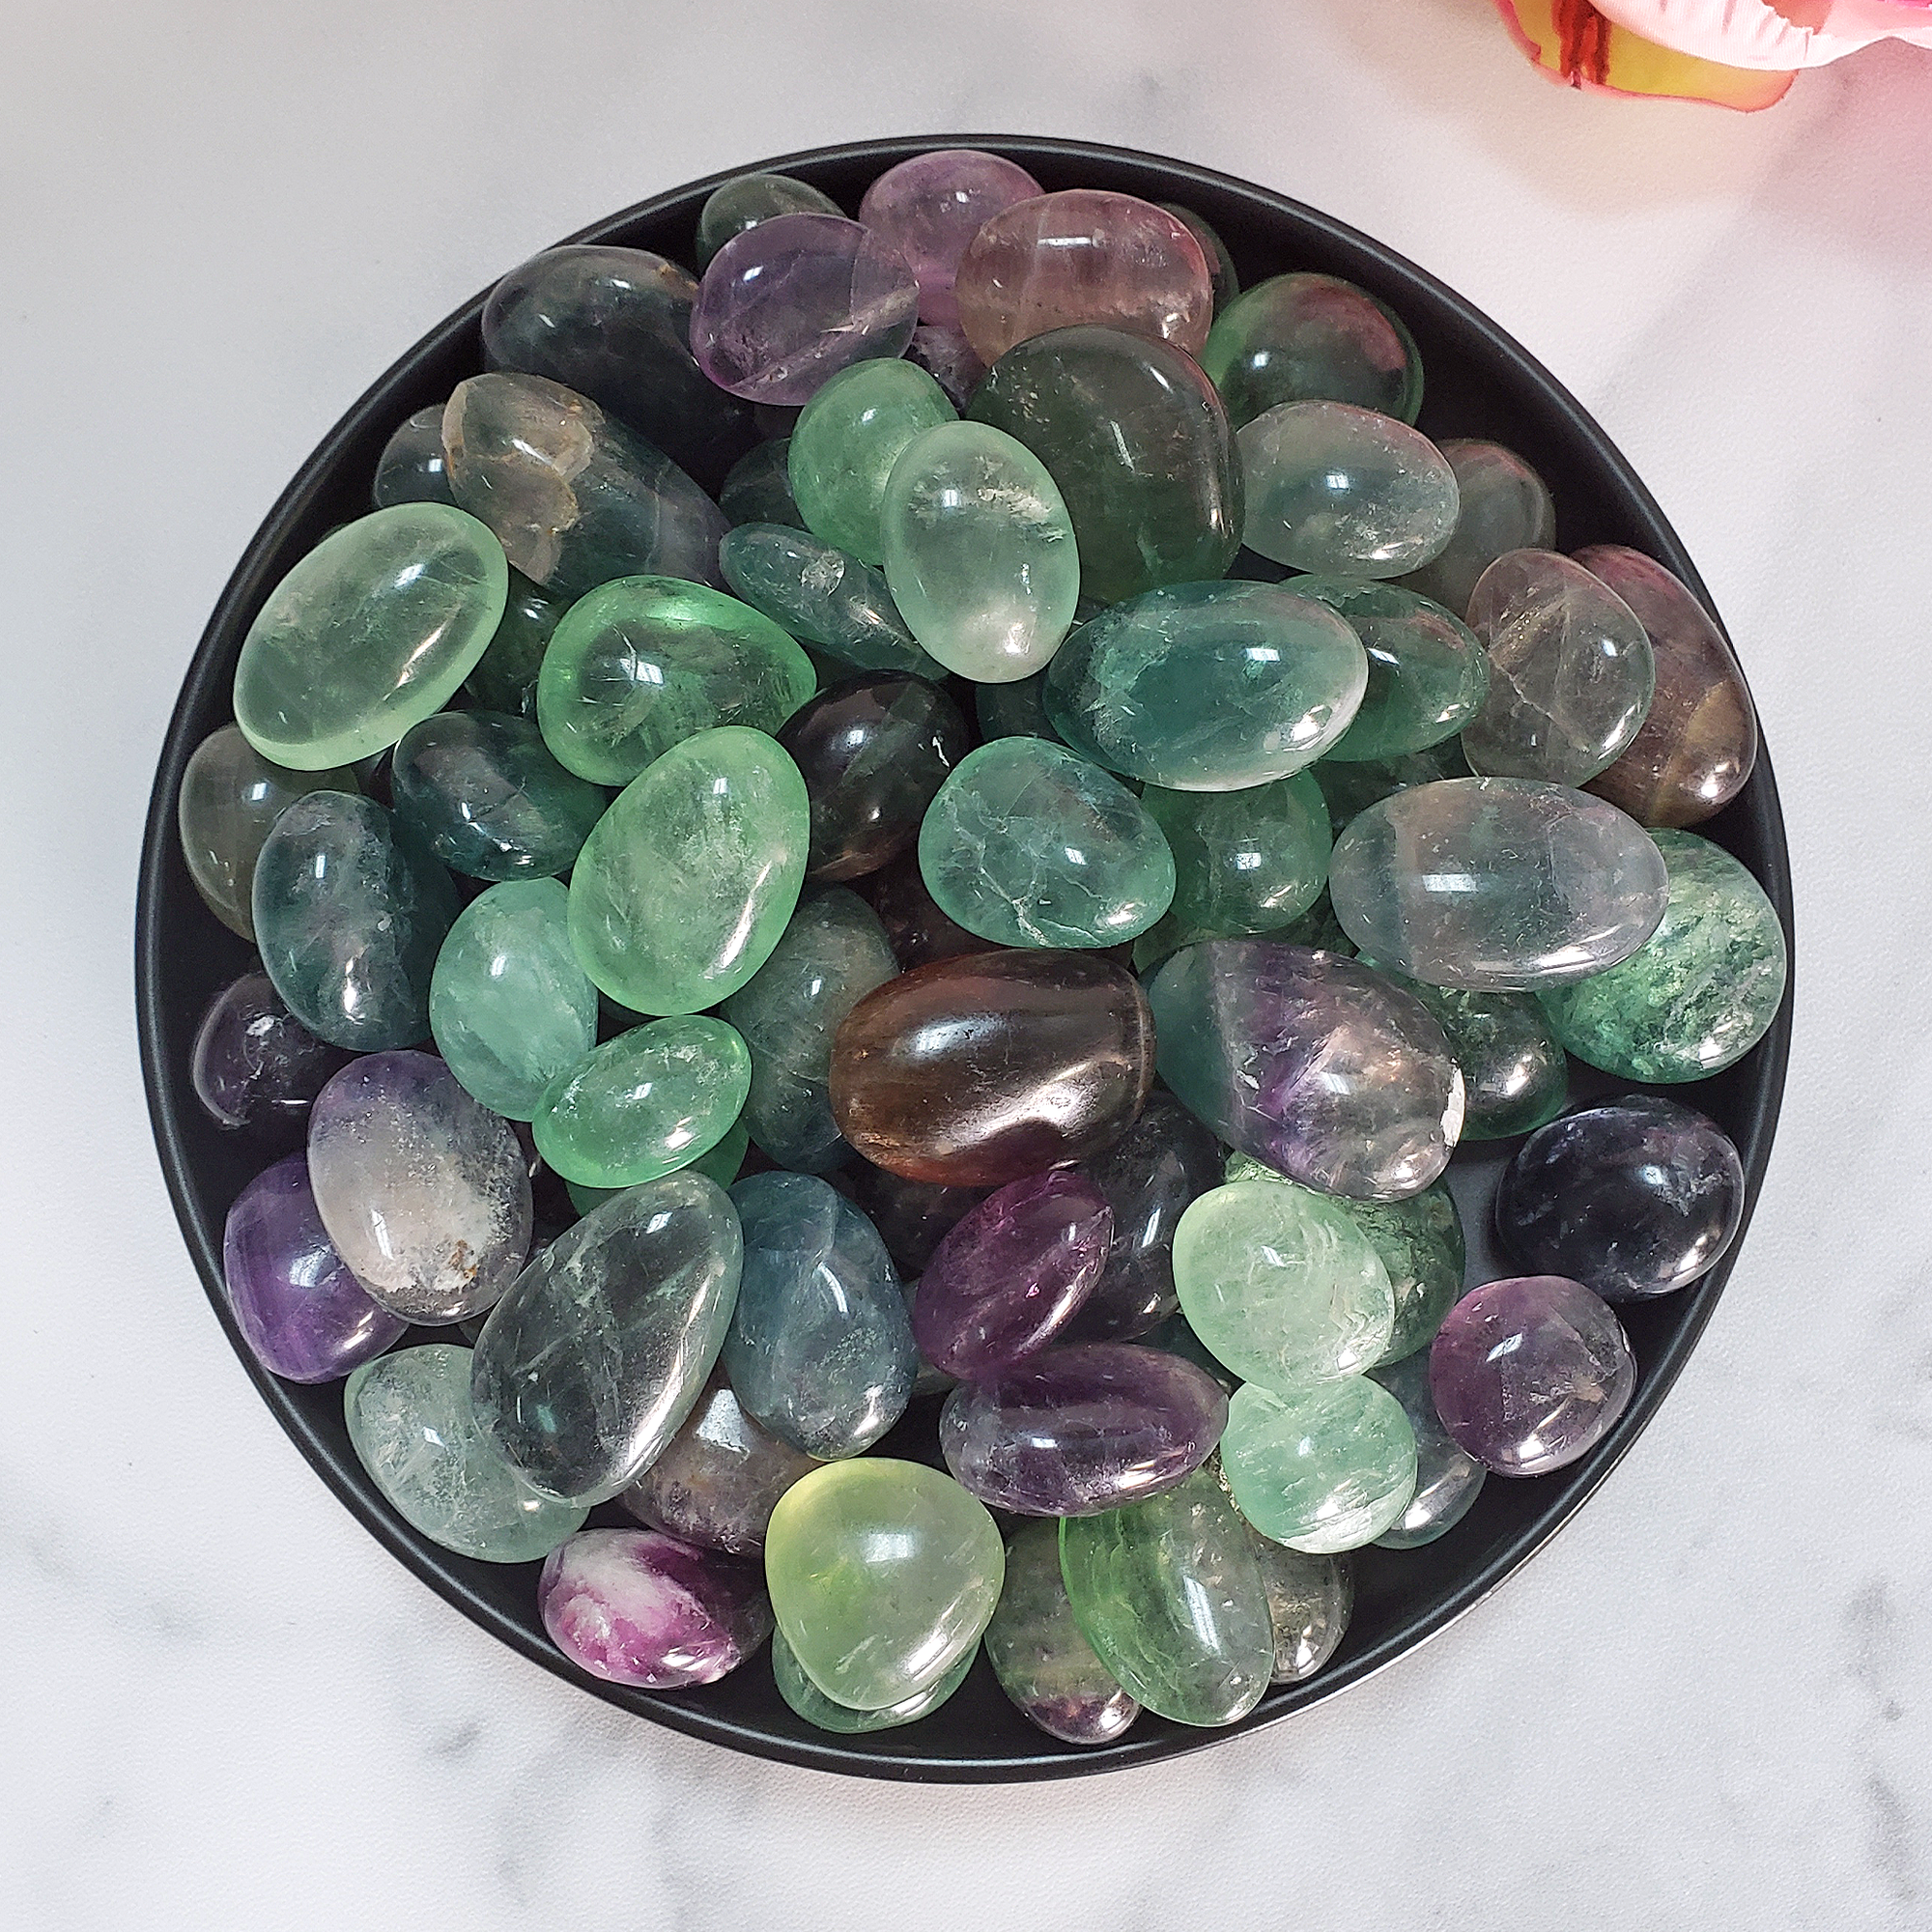 Fluorite Crystal Natural Gemstone Tumbled Stone | High Quality - AAA Grade Rainbow Fluorite in a Black Ceramic Dish